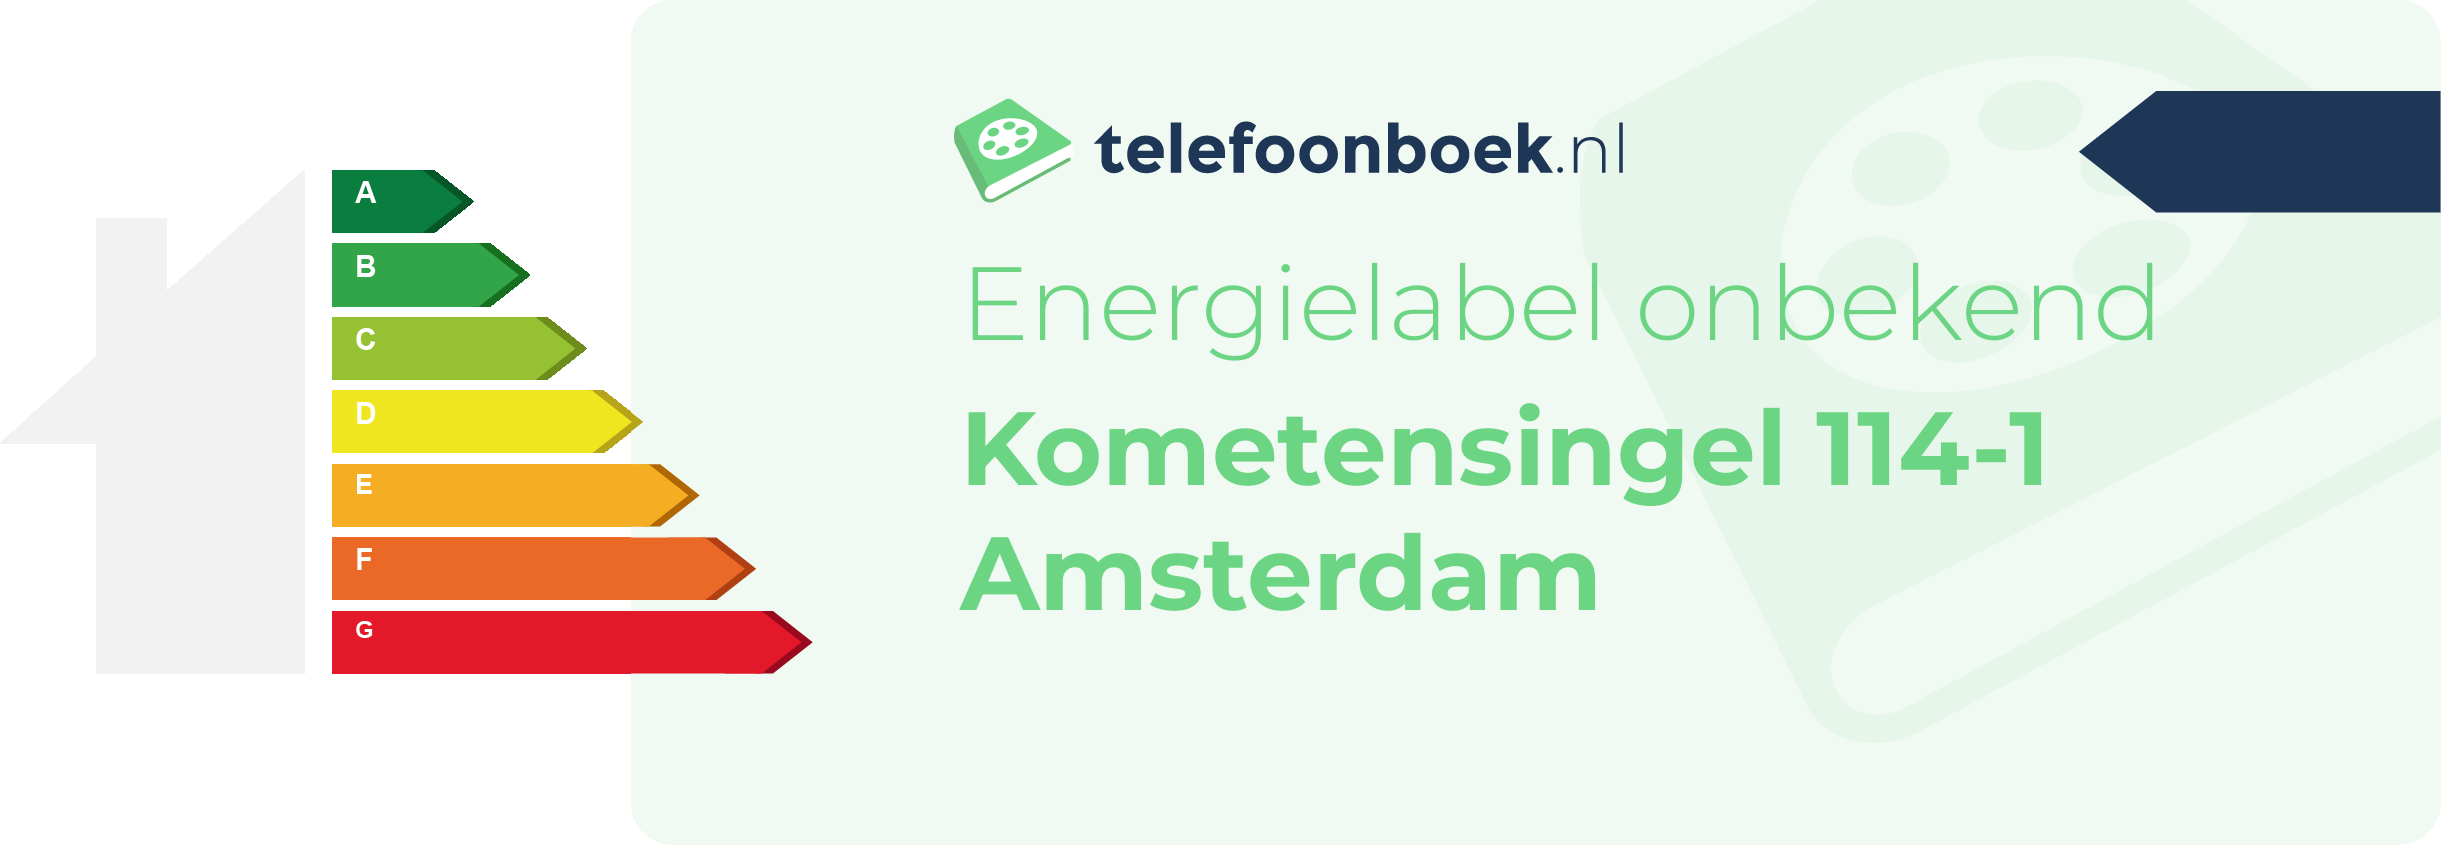 Energielabel Kometensingel 114-1 Amsterdam